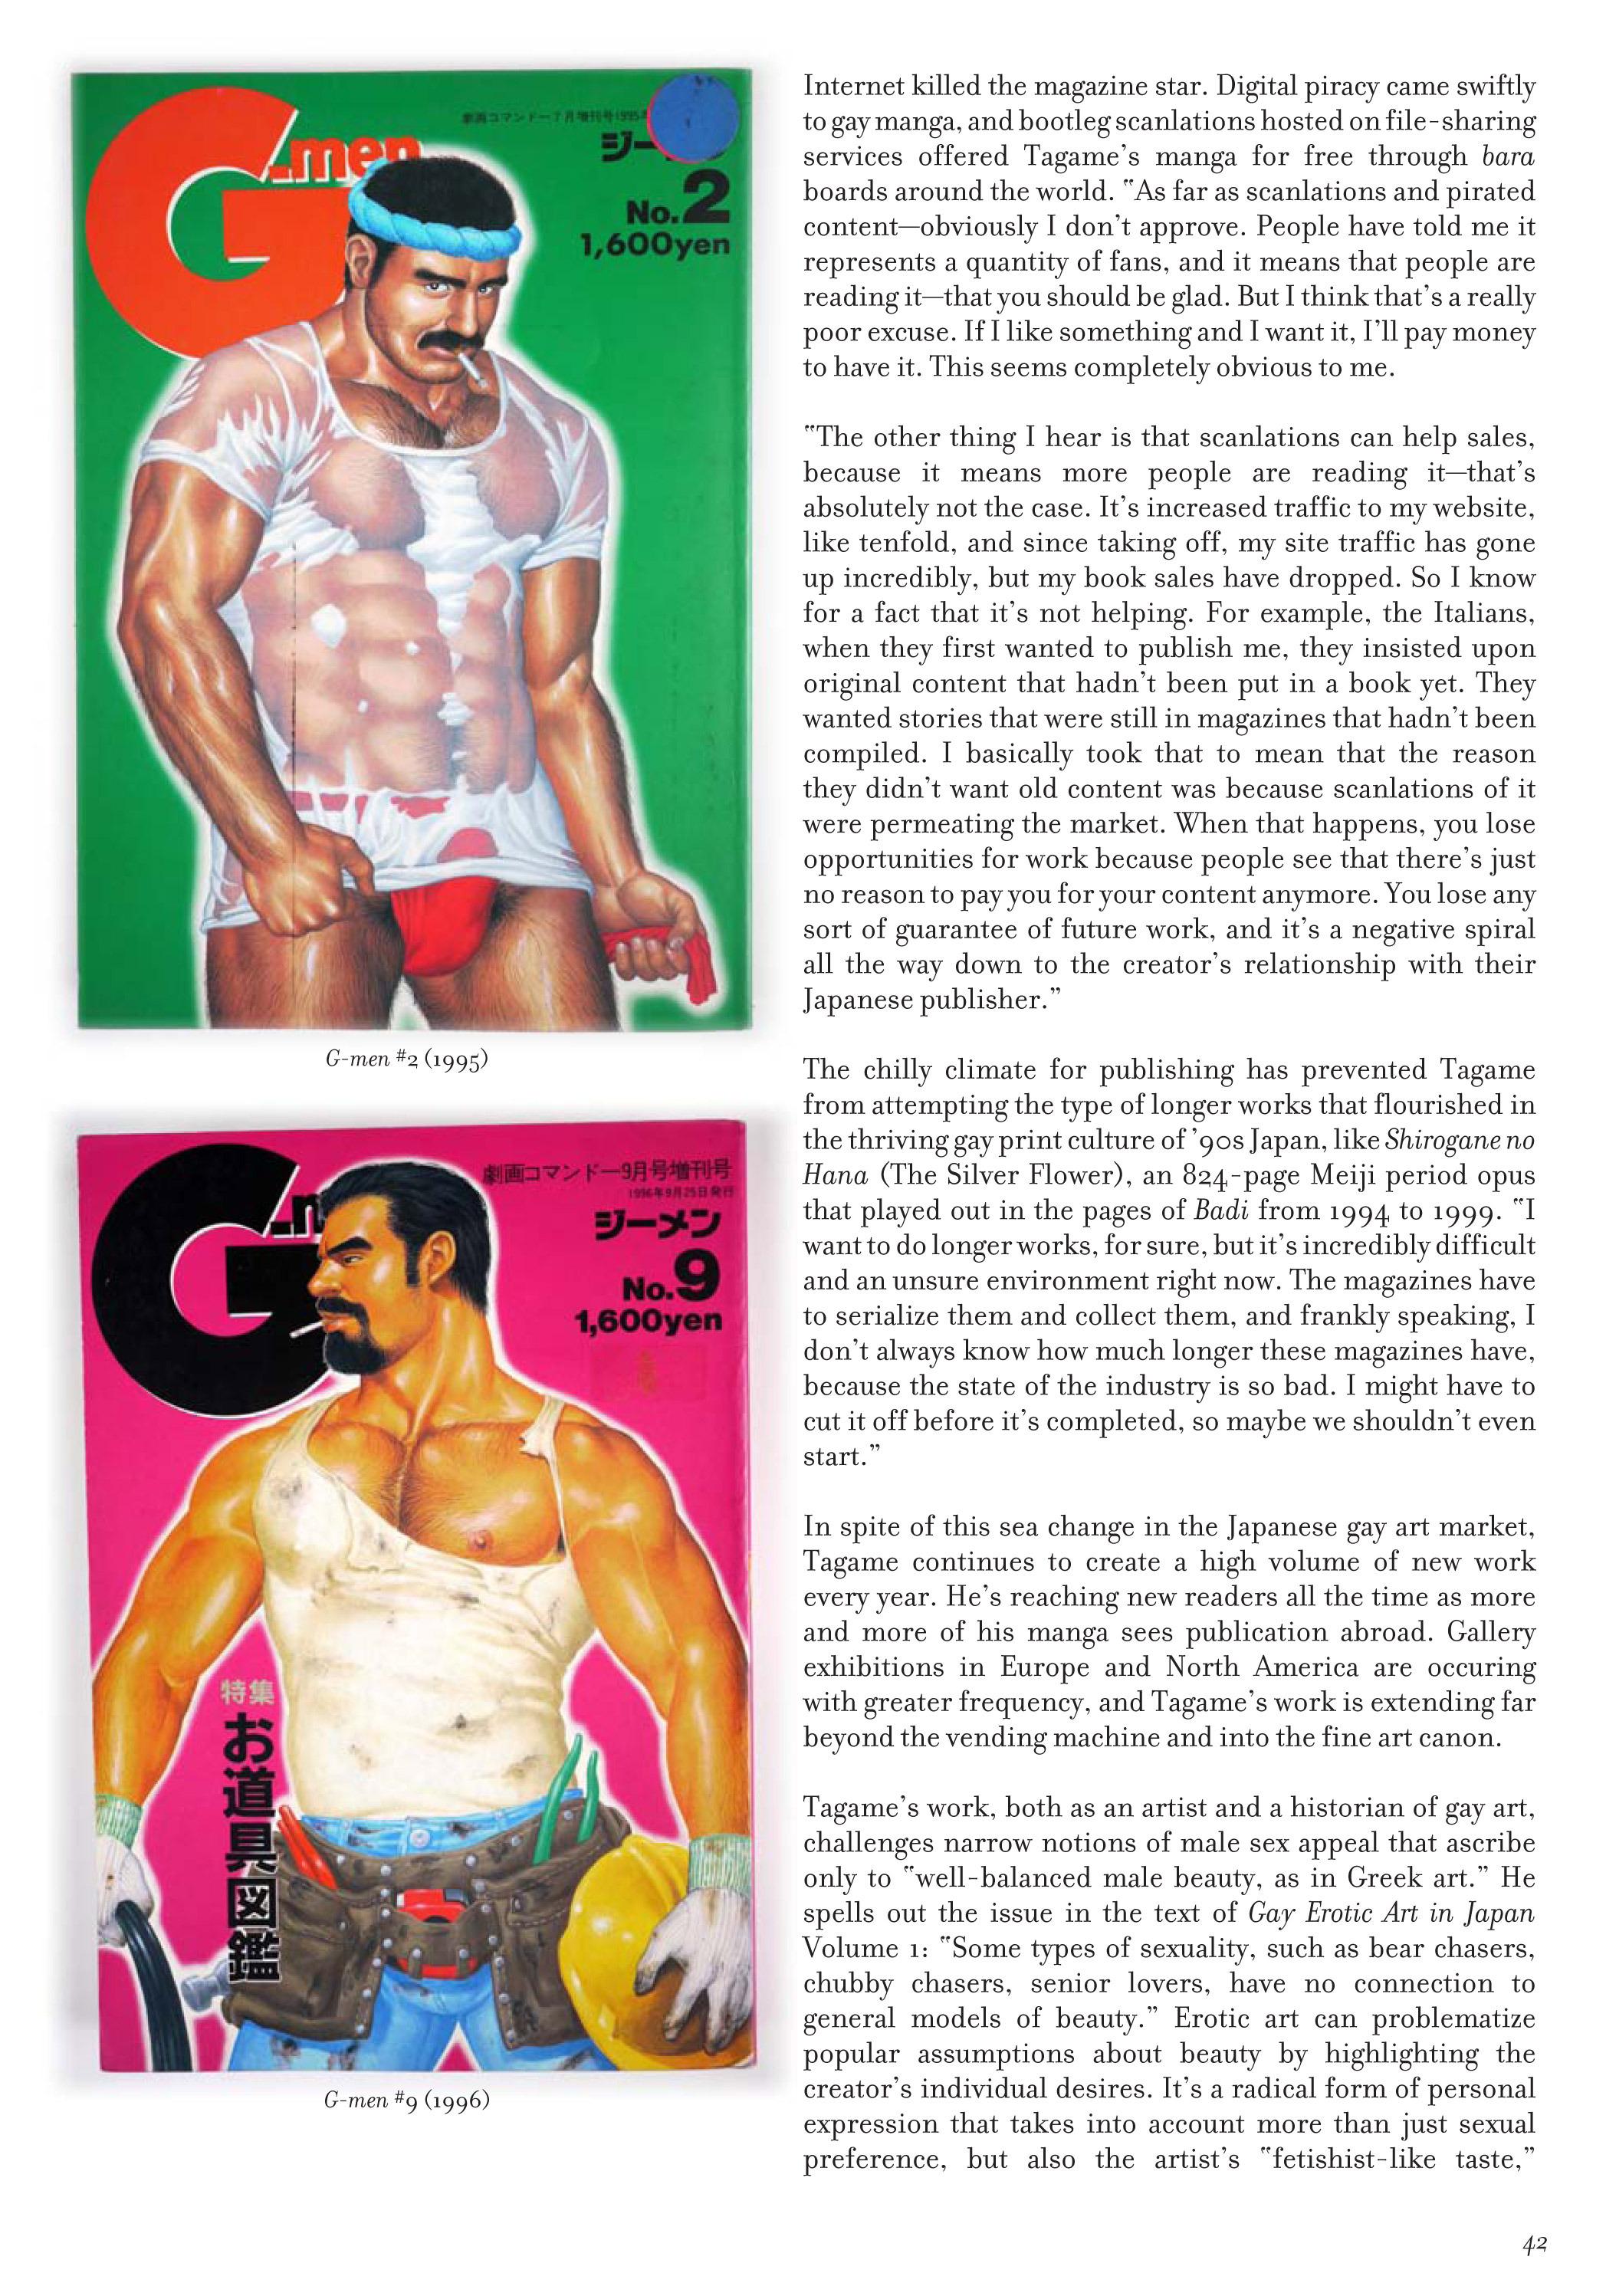 Massive - Gay Manga and the Men Who Make It 41